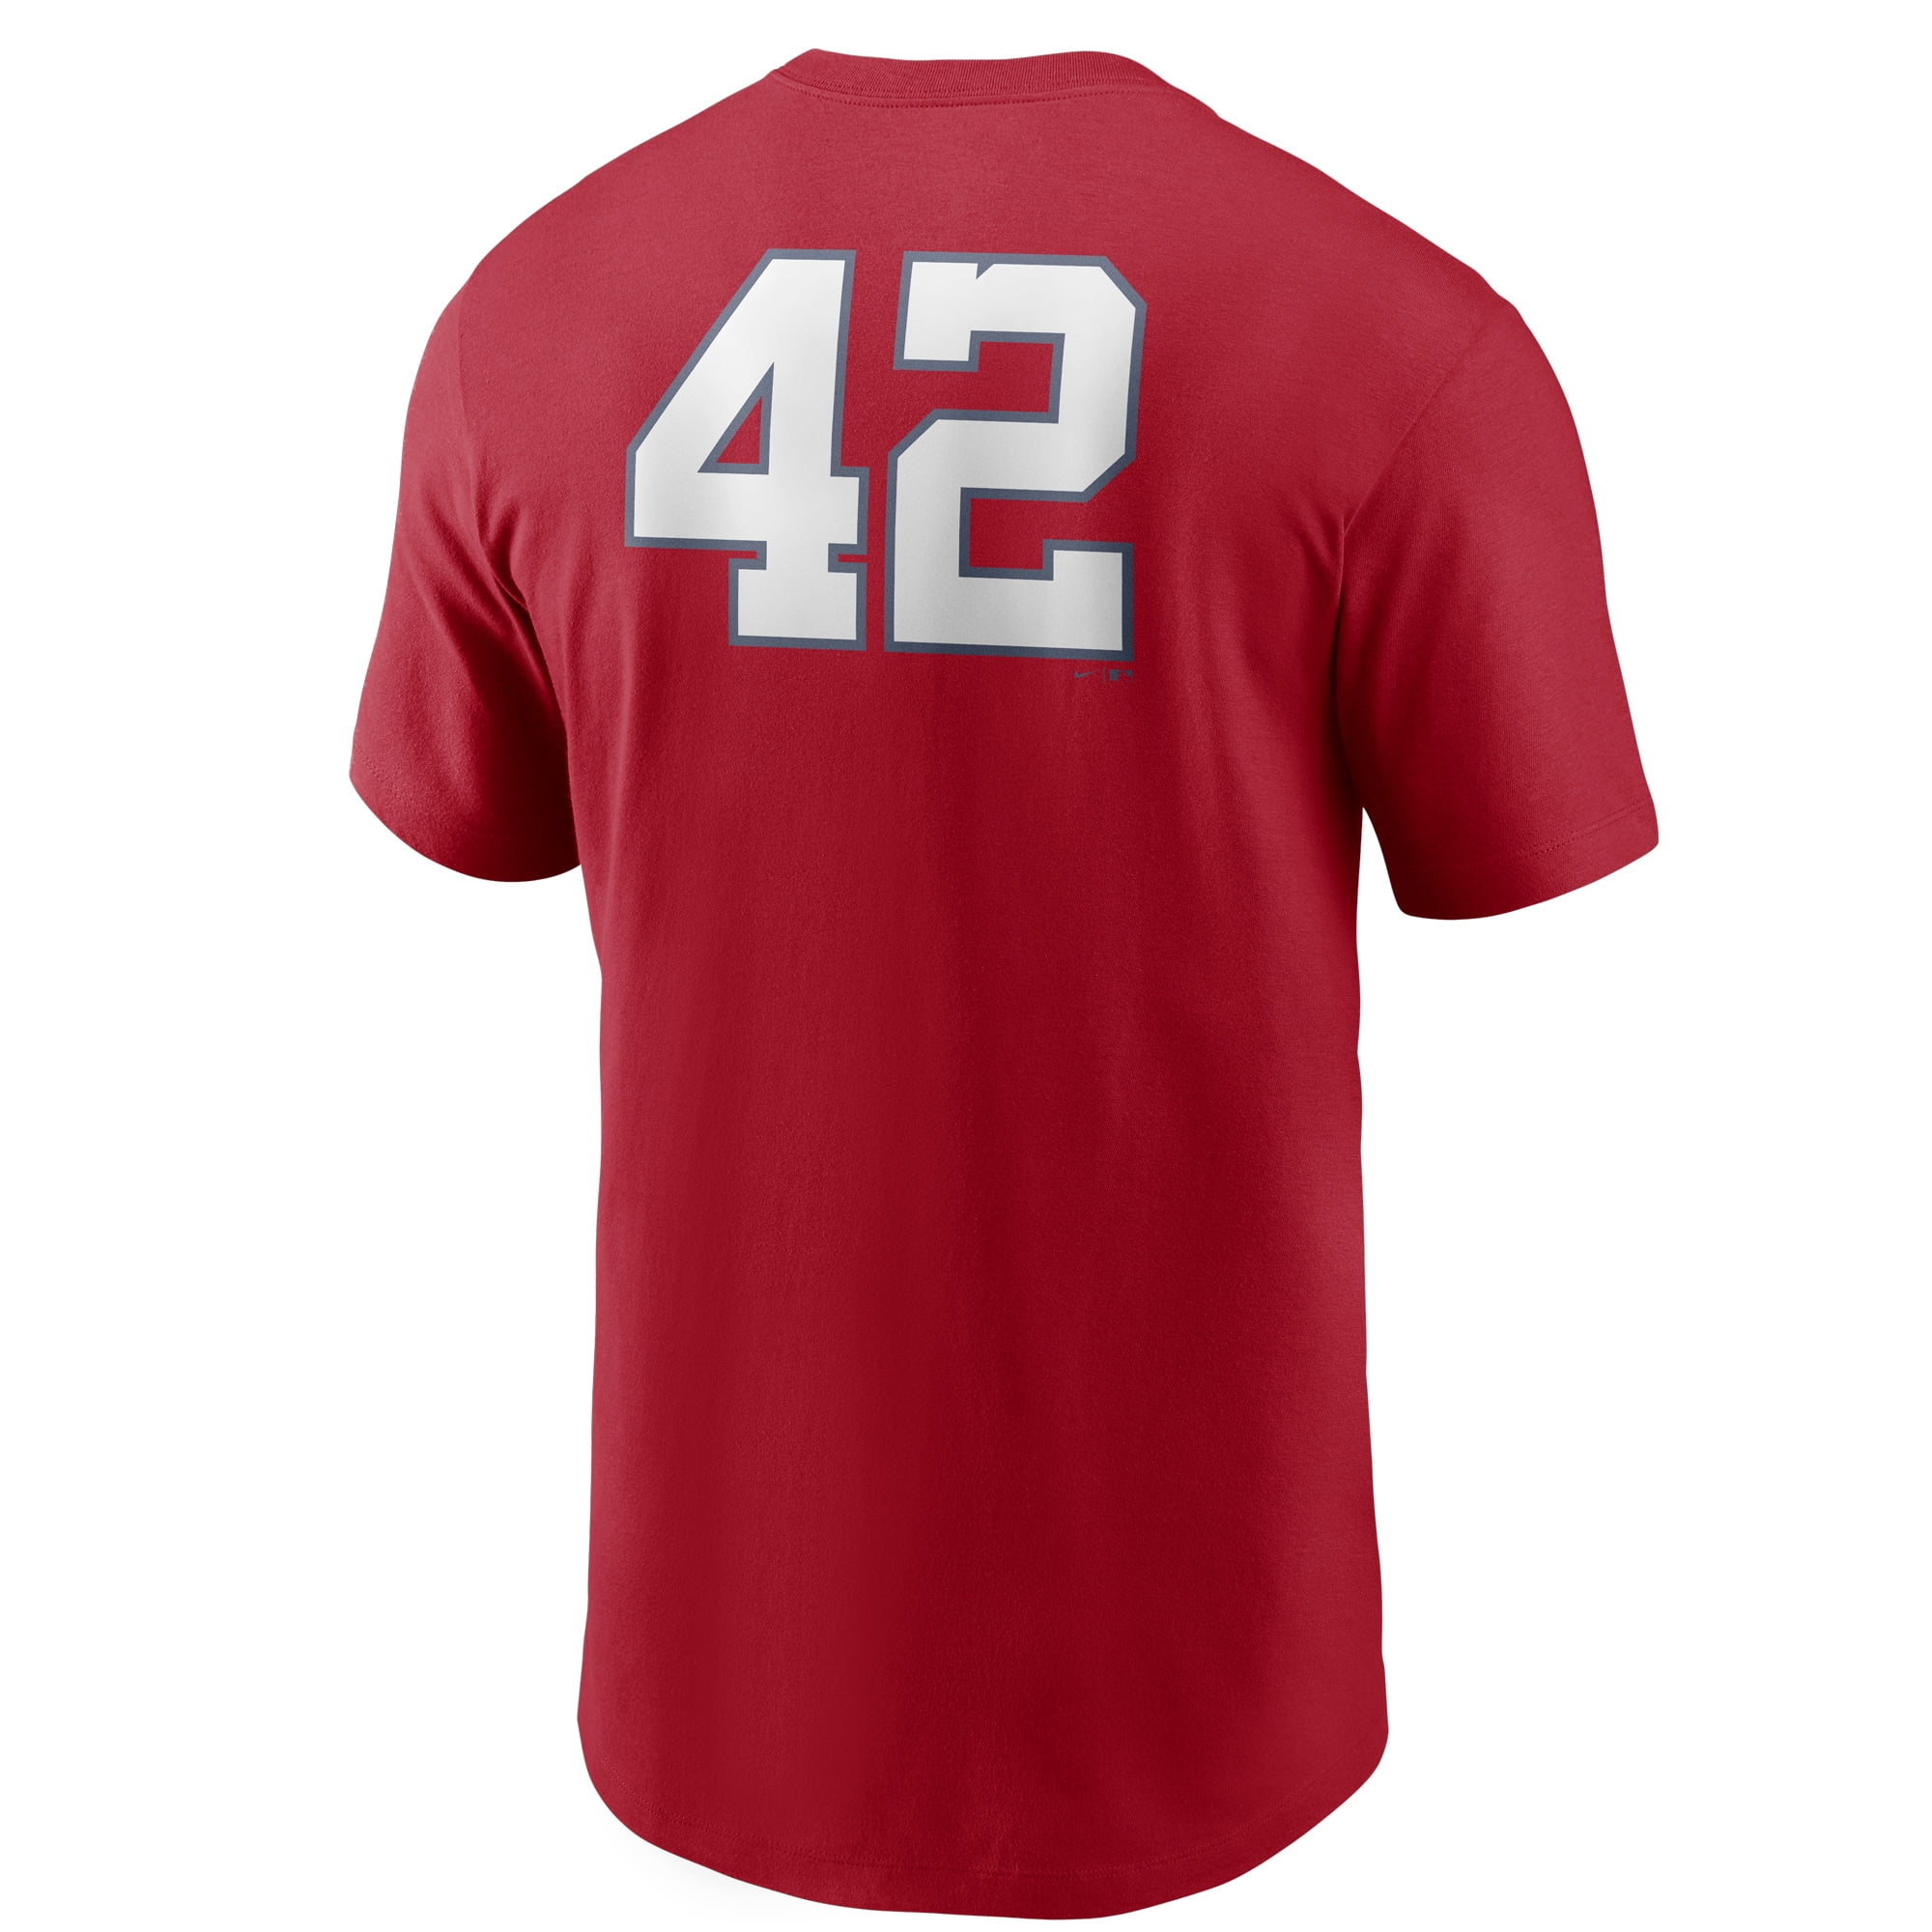 jackie robinson 42 t shirt